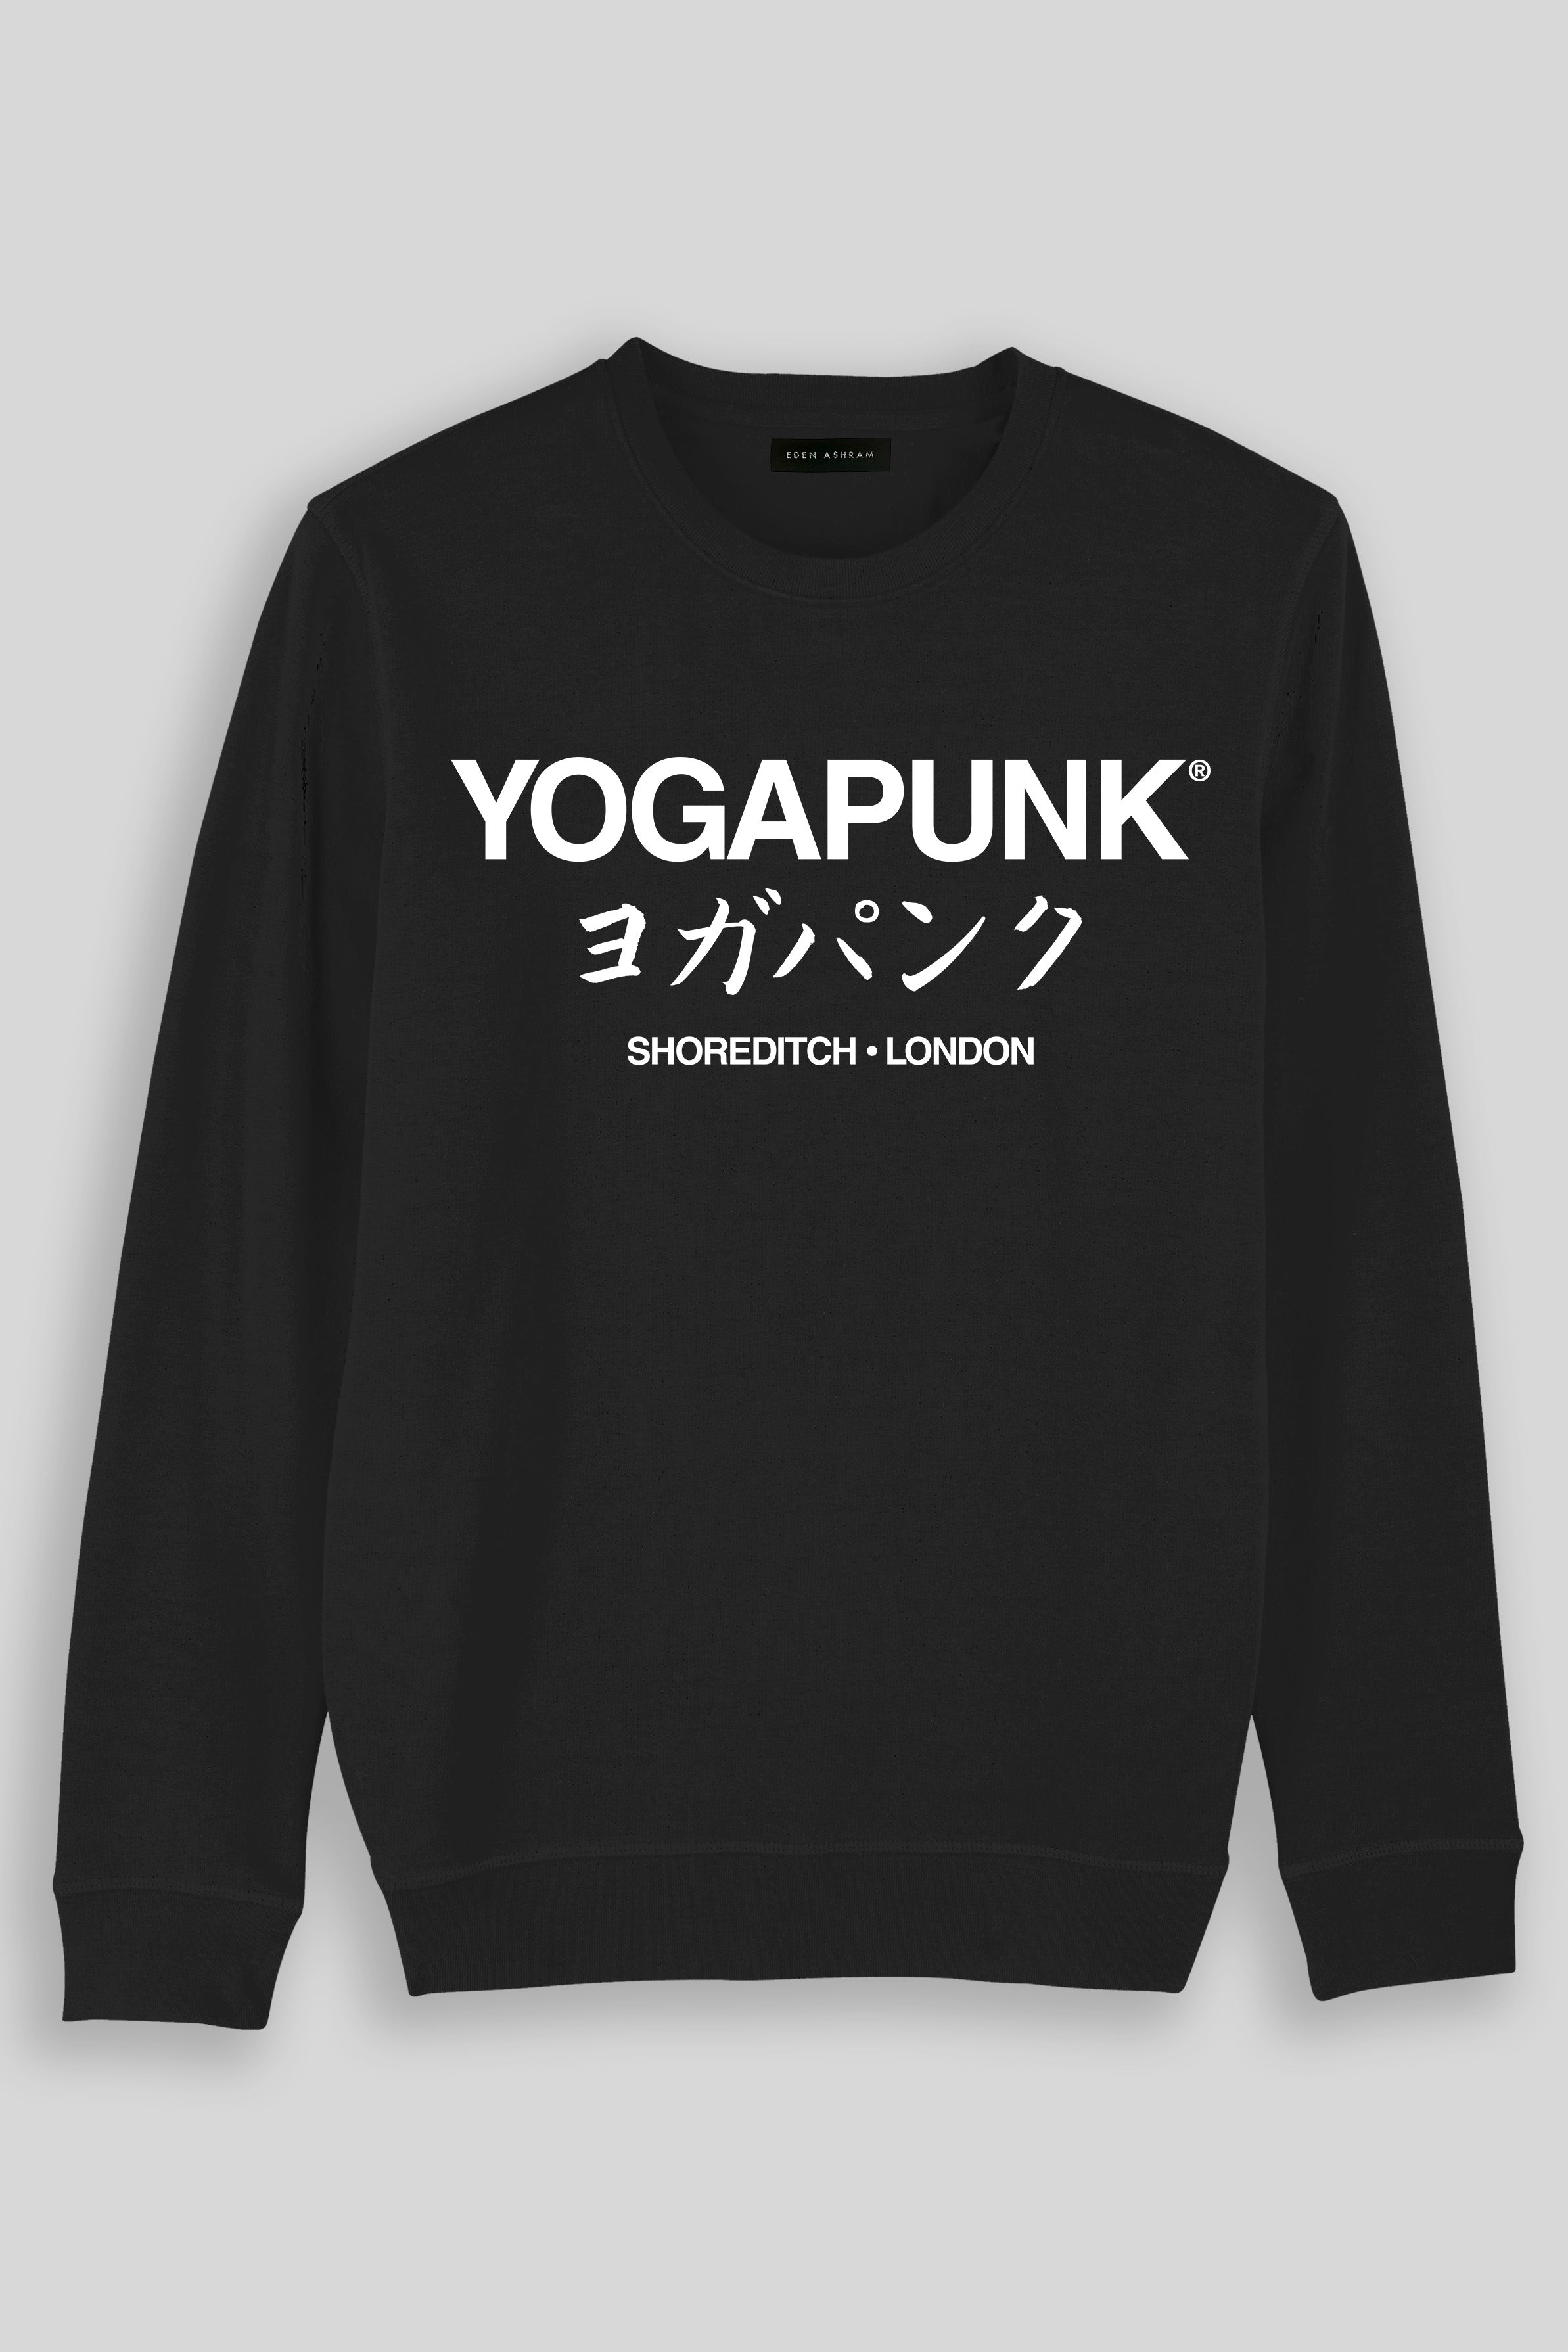 Eden Ashram Yoga Punk® Shoreditch Premium Crew Neck Sweatshirt Black